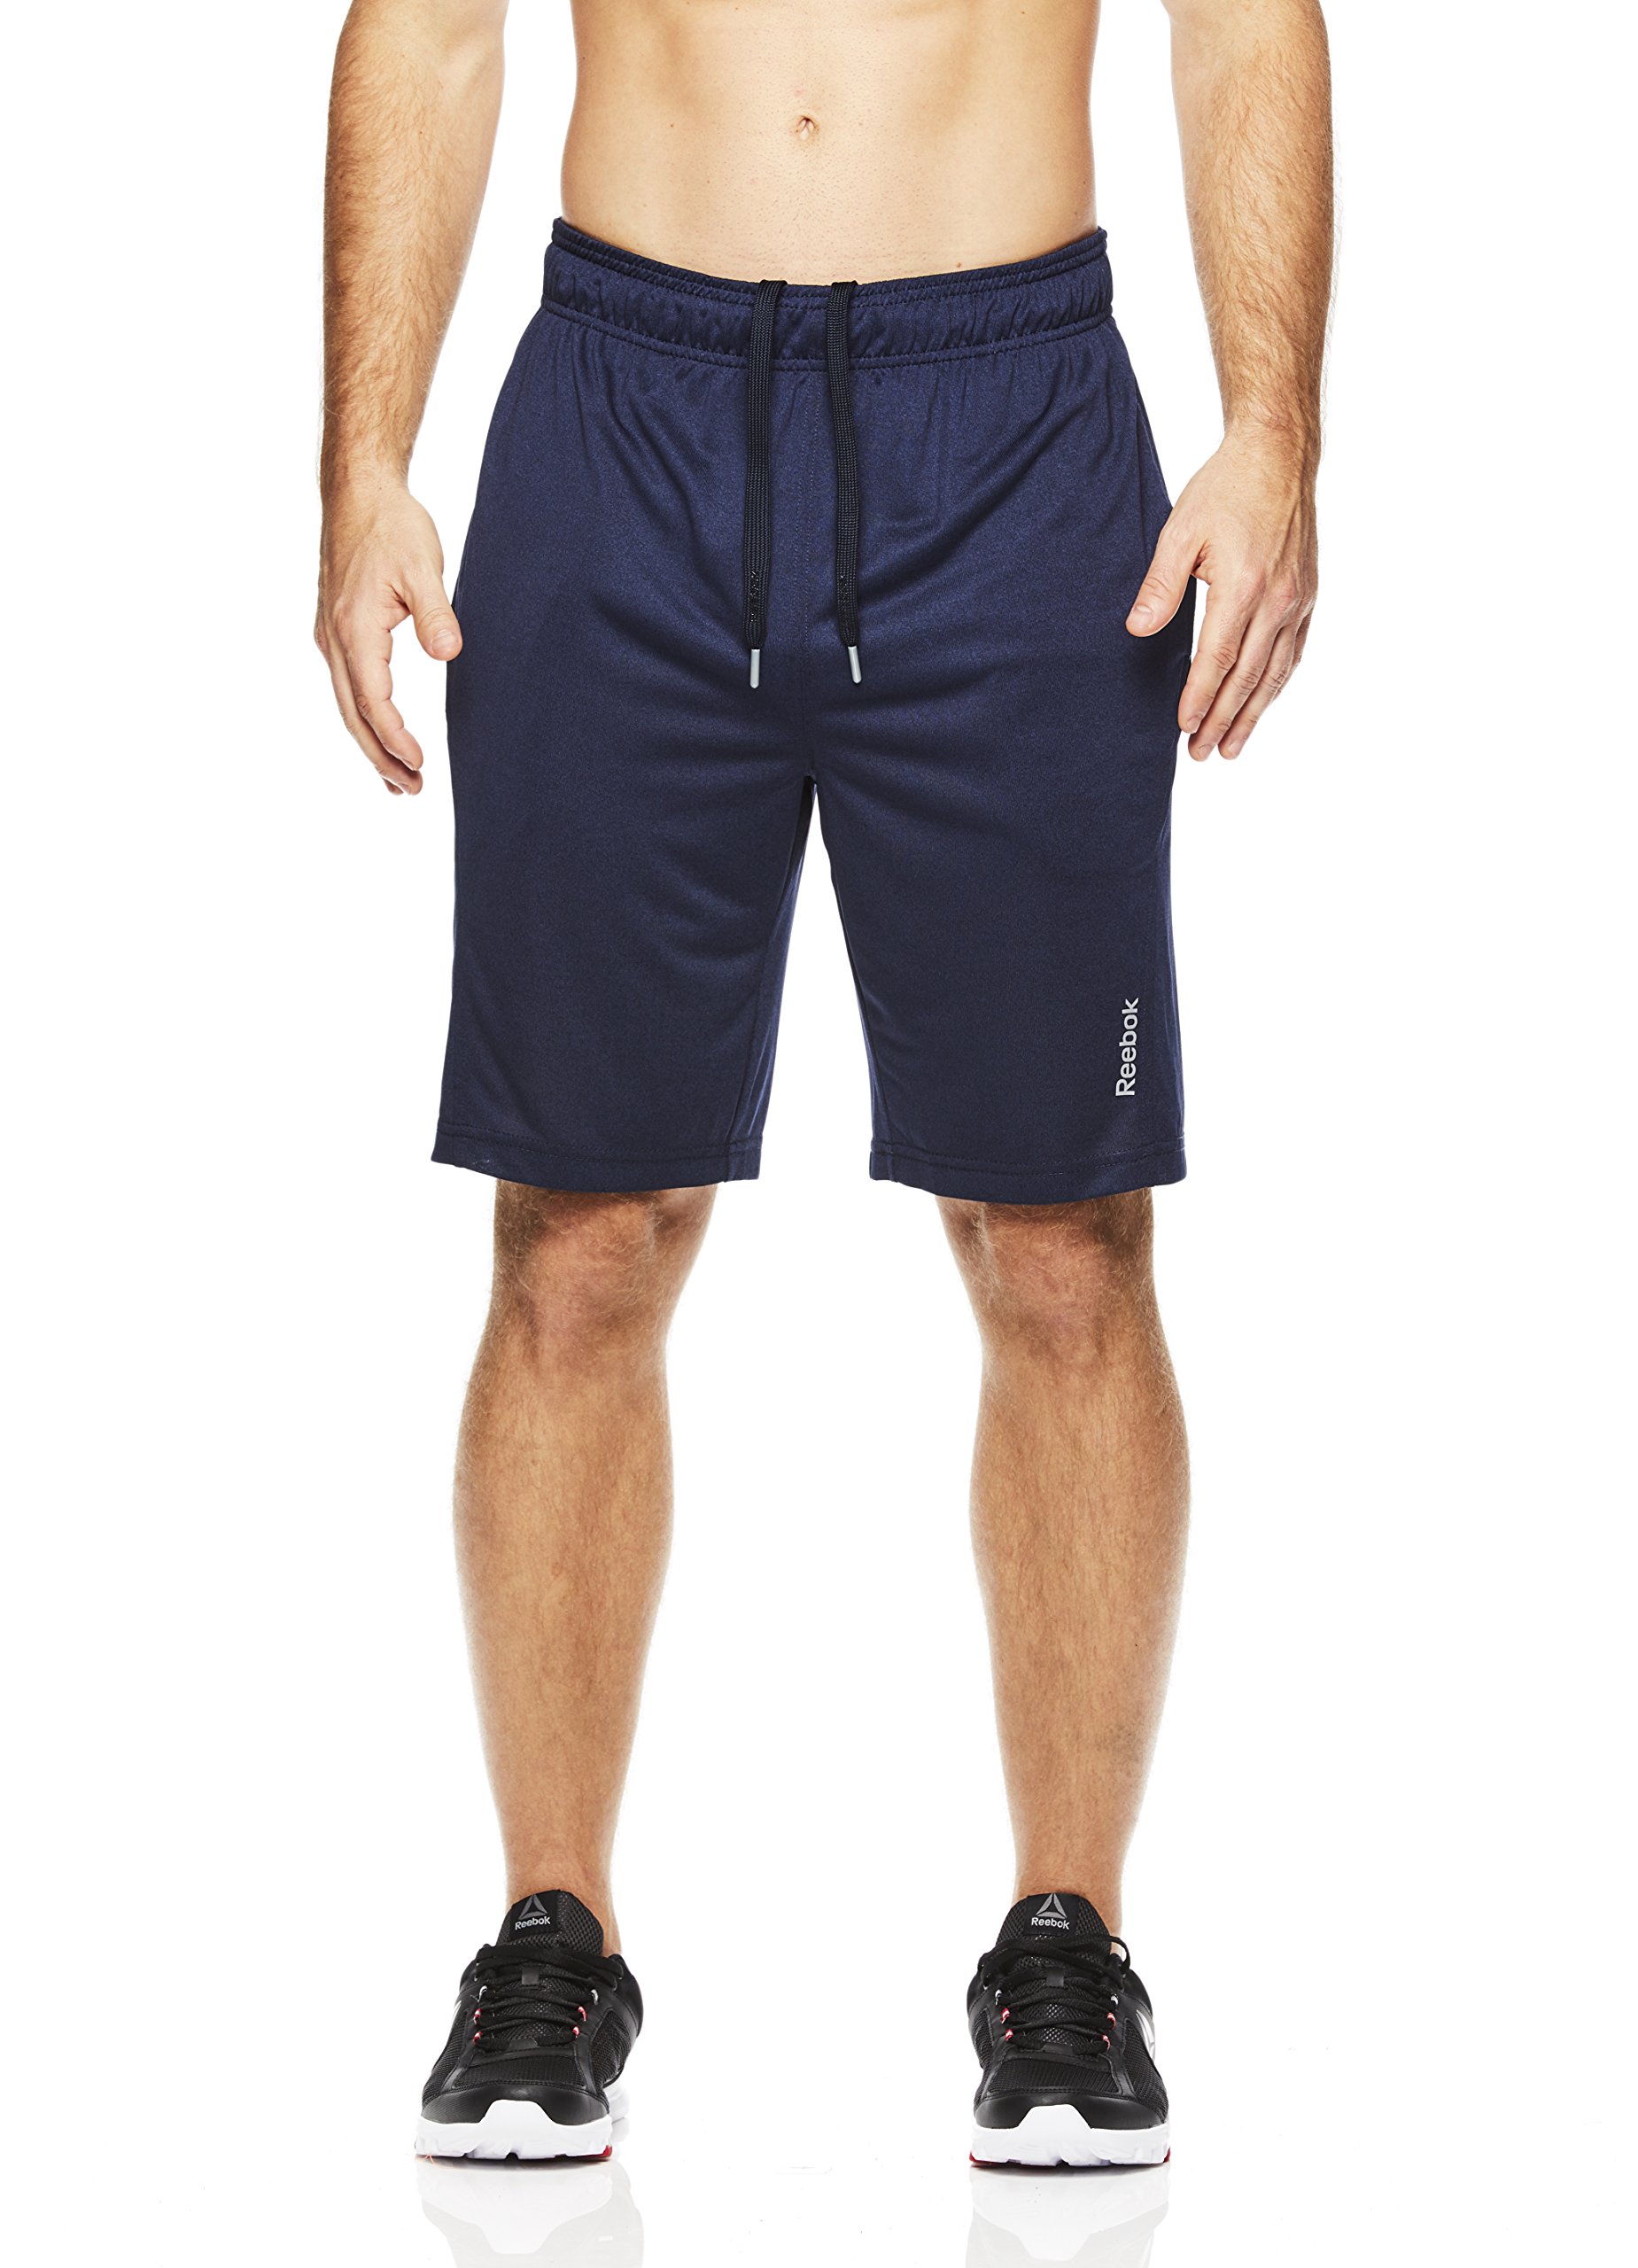 reebok men's athletic shorts